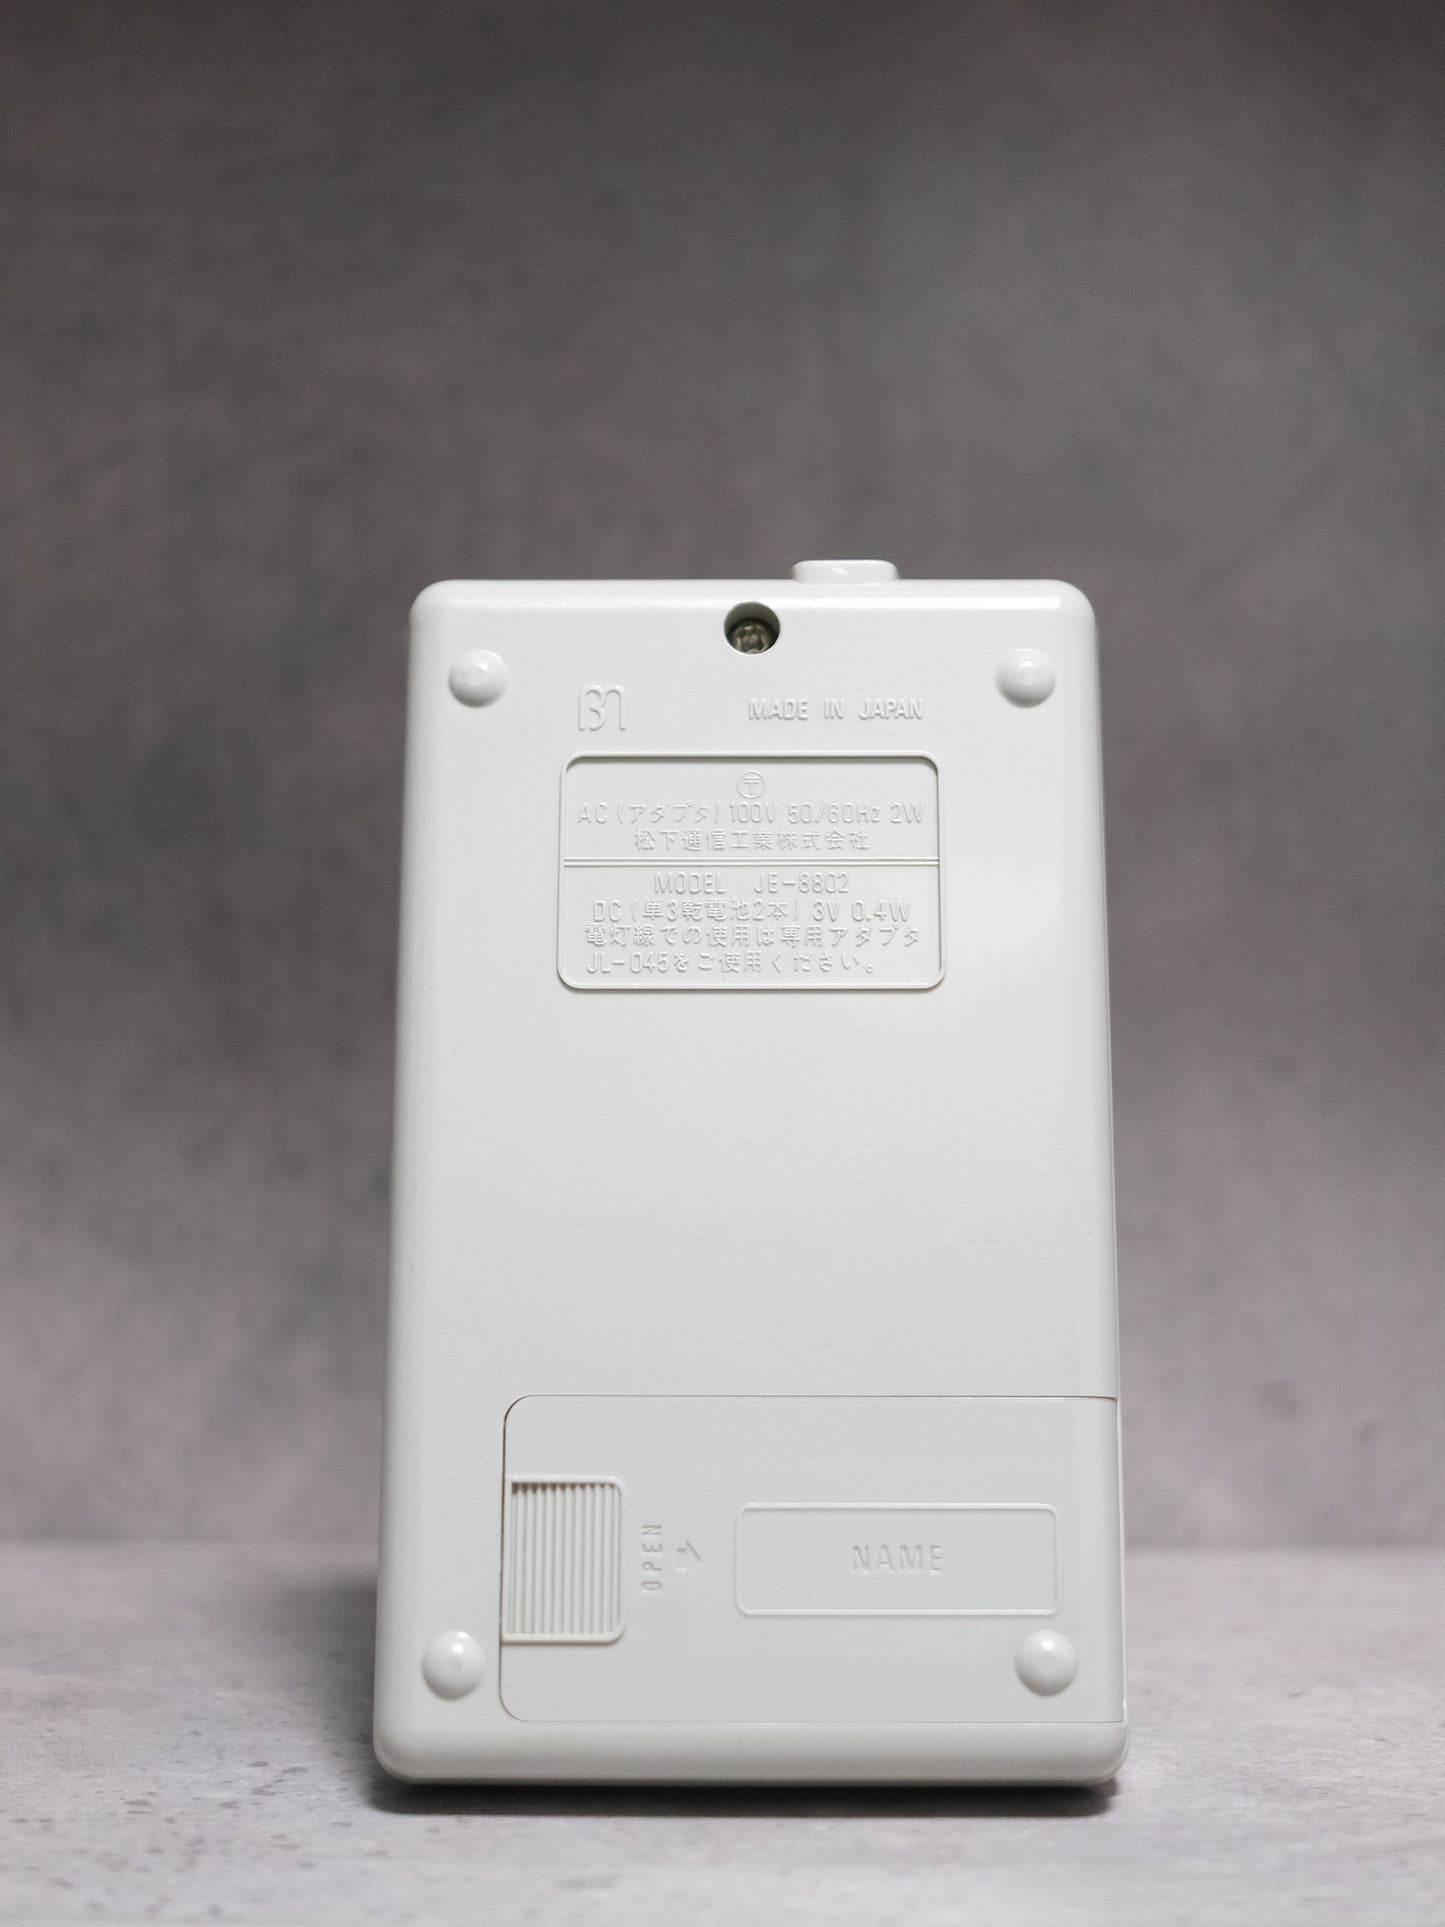 日本制 1975 National Panac JE-8802 VFD Electronic Calculator 營光管 計數機 電卓